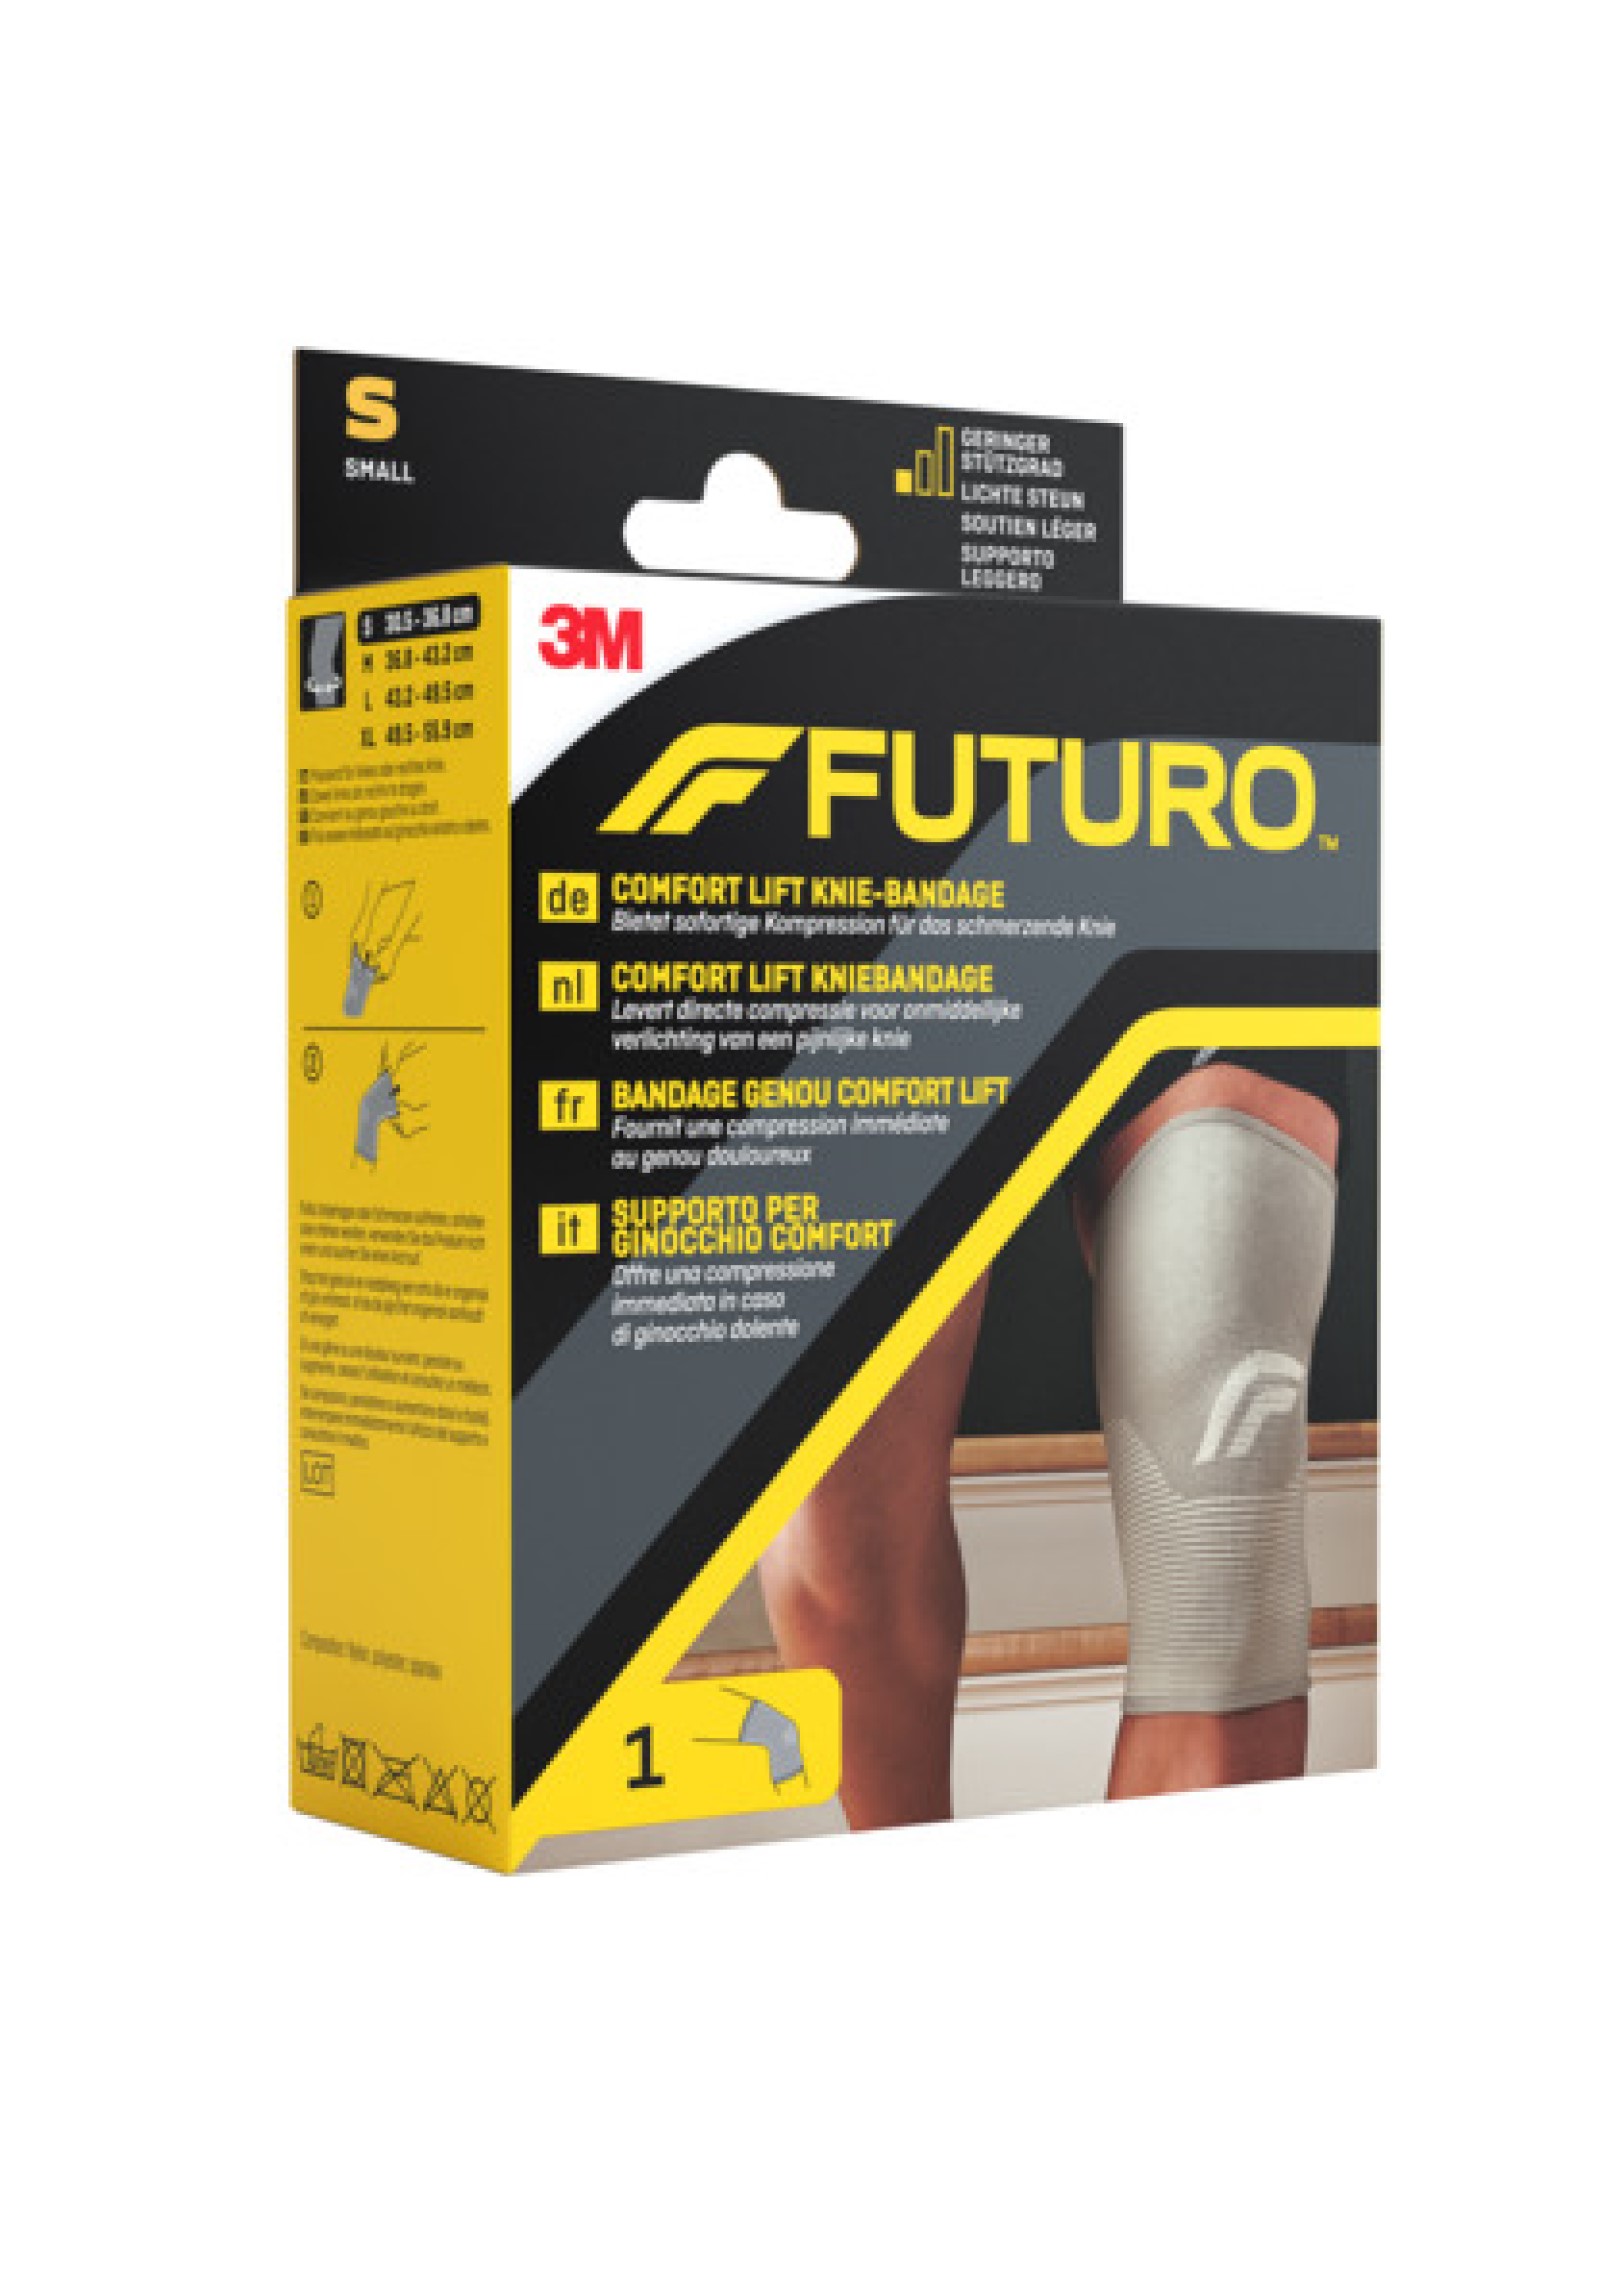 FUTURO™ Comfort Lift Knie-Bandage 76586, S (30.5 - 36.8 cm)